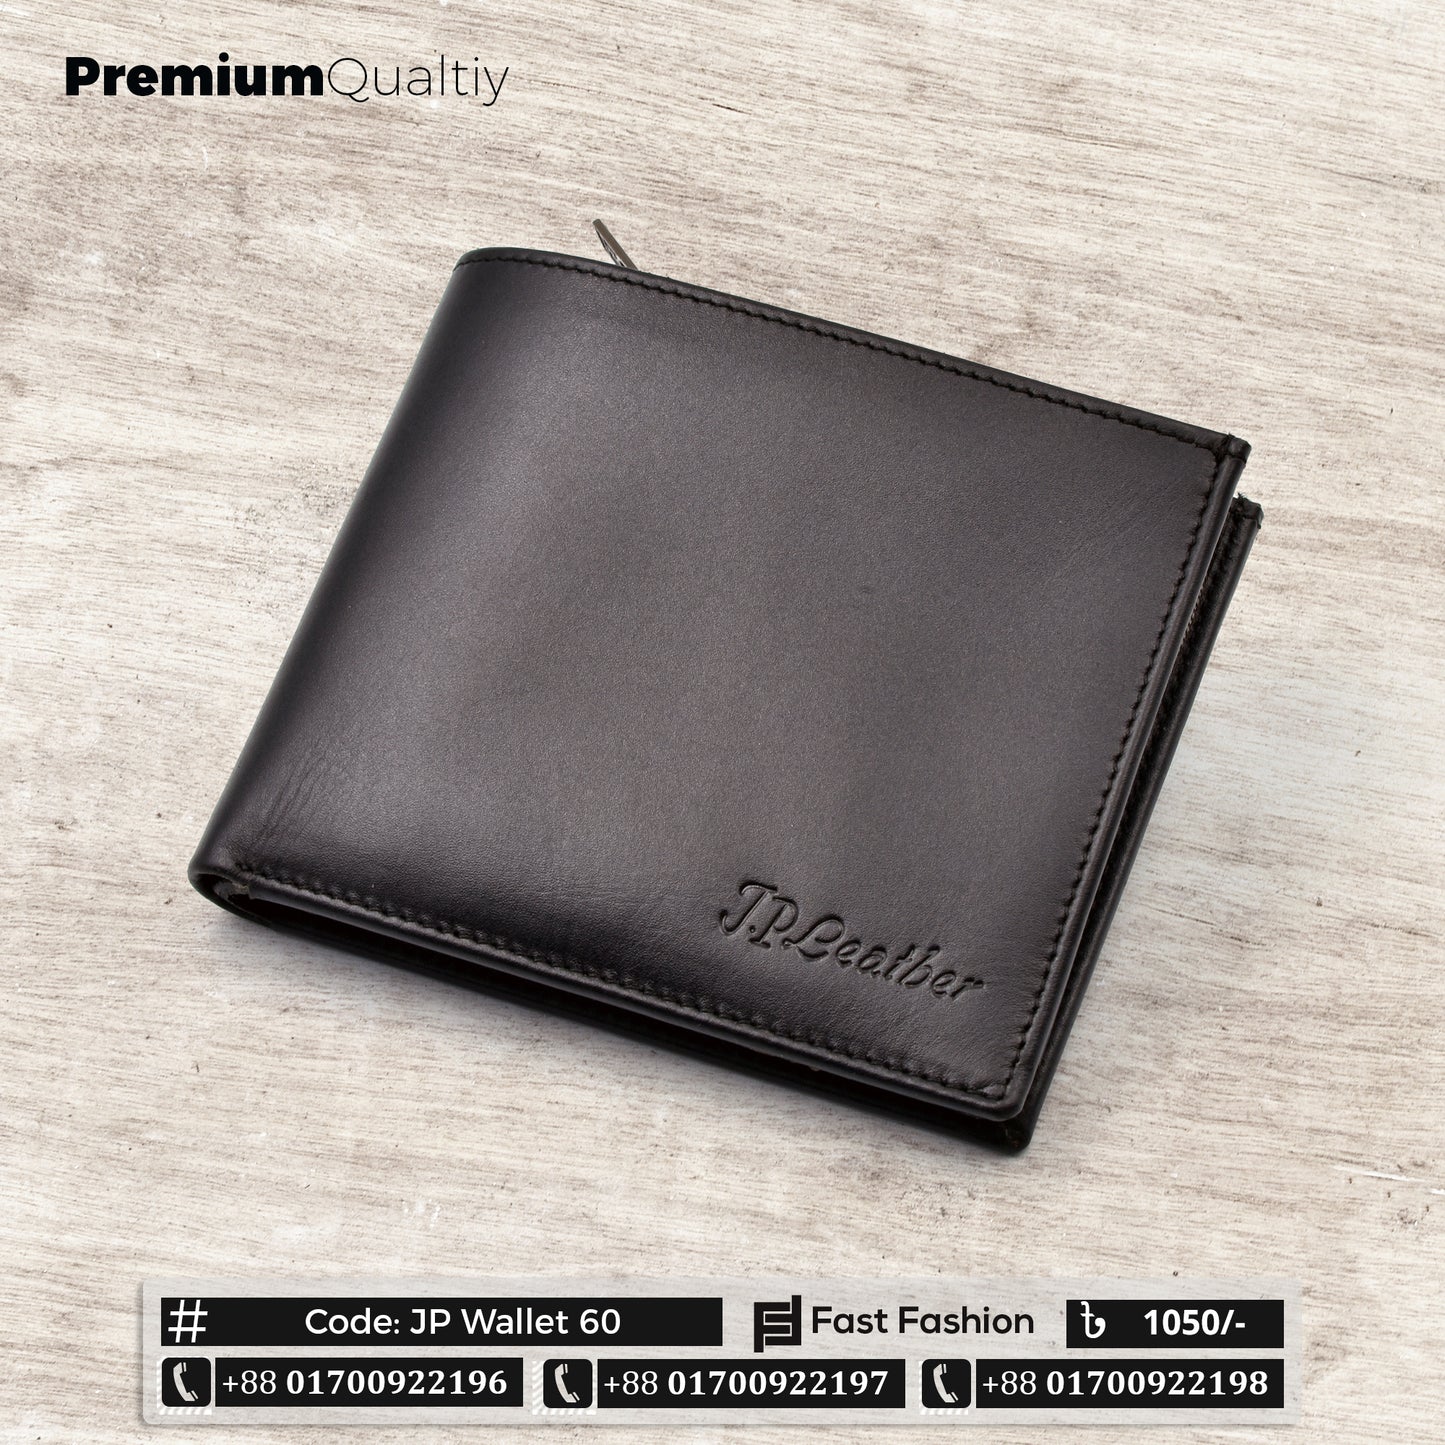 Original Leather Pocket Size Premium Quality Wallet | JP Wallet 60